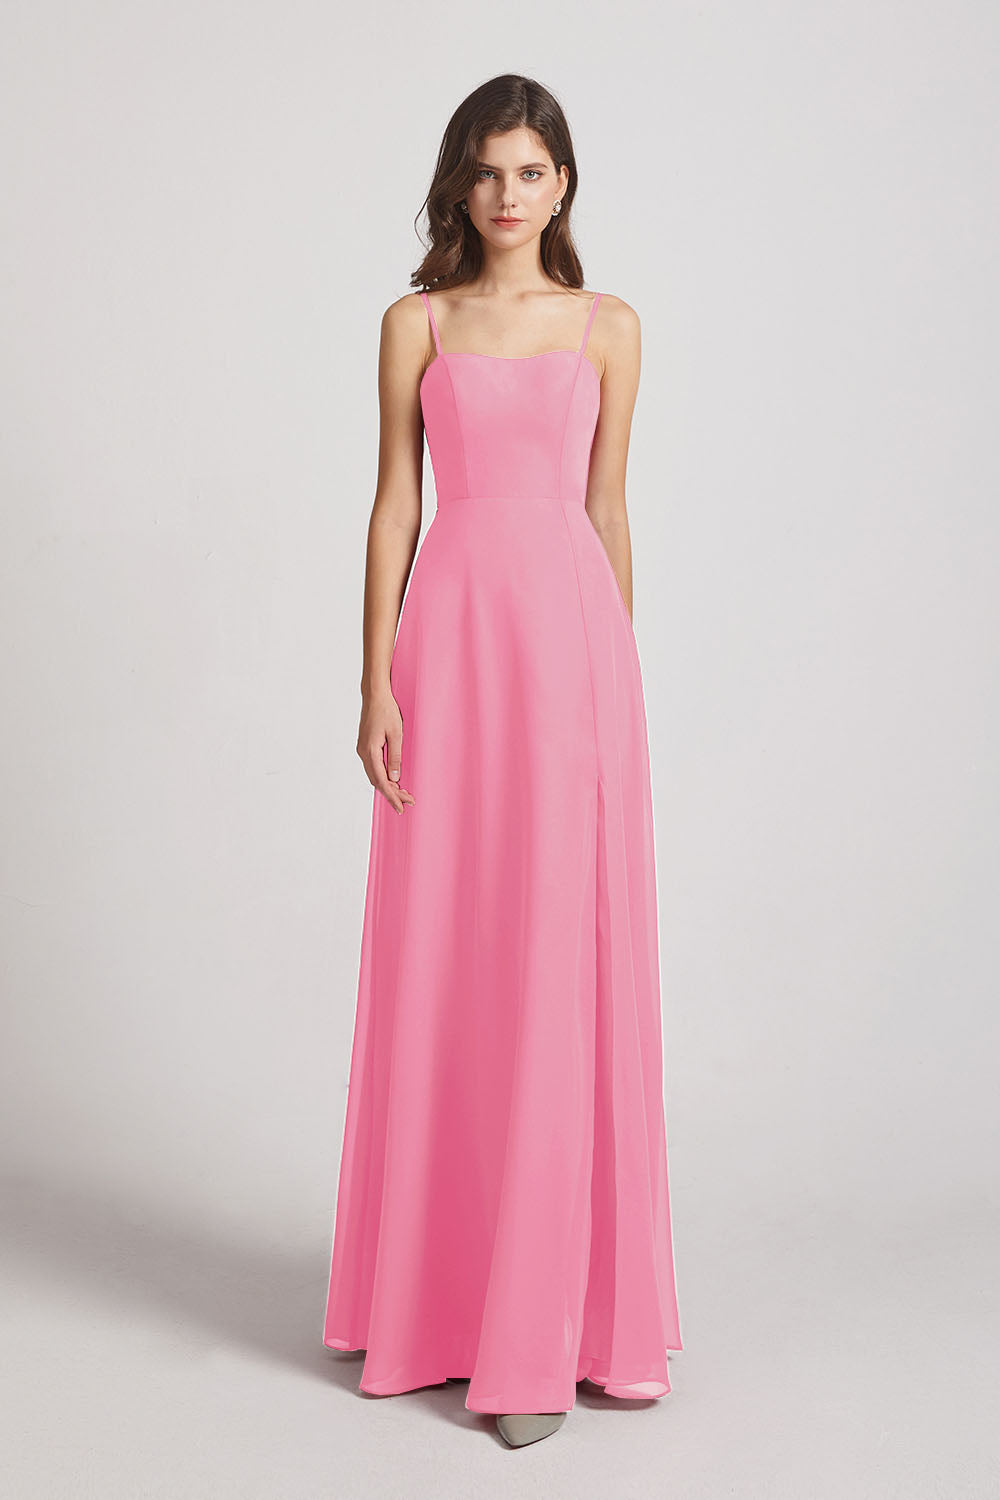 Alfa Bridal Hot Pink Spaghetti Straps Long Chiffon Bridesmaid Dresses with Side Slit (AF0112)